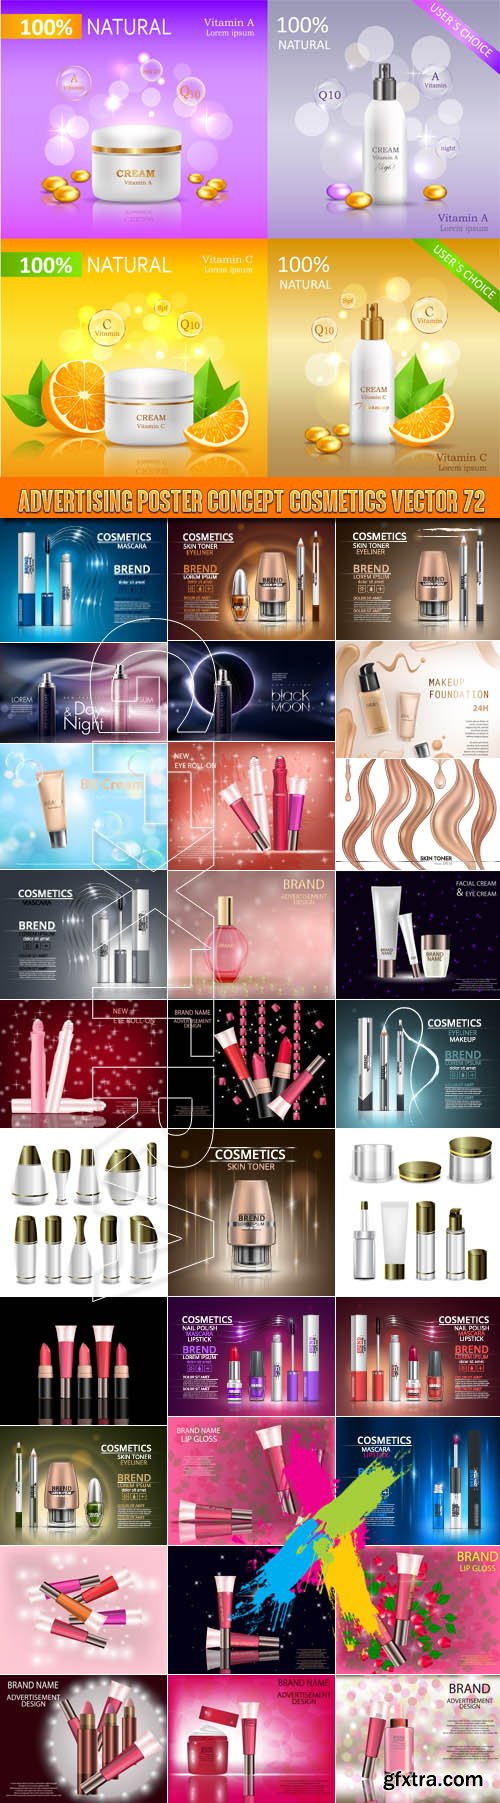 Advertising Poster Concept Cosmetics vector 72